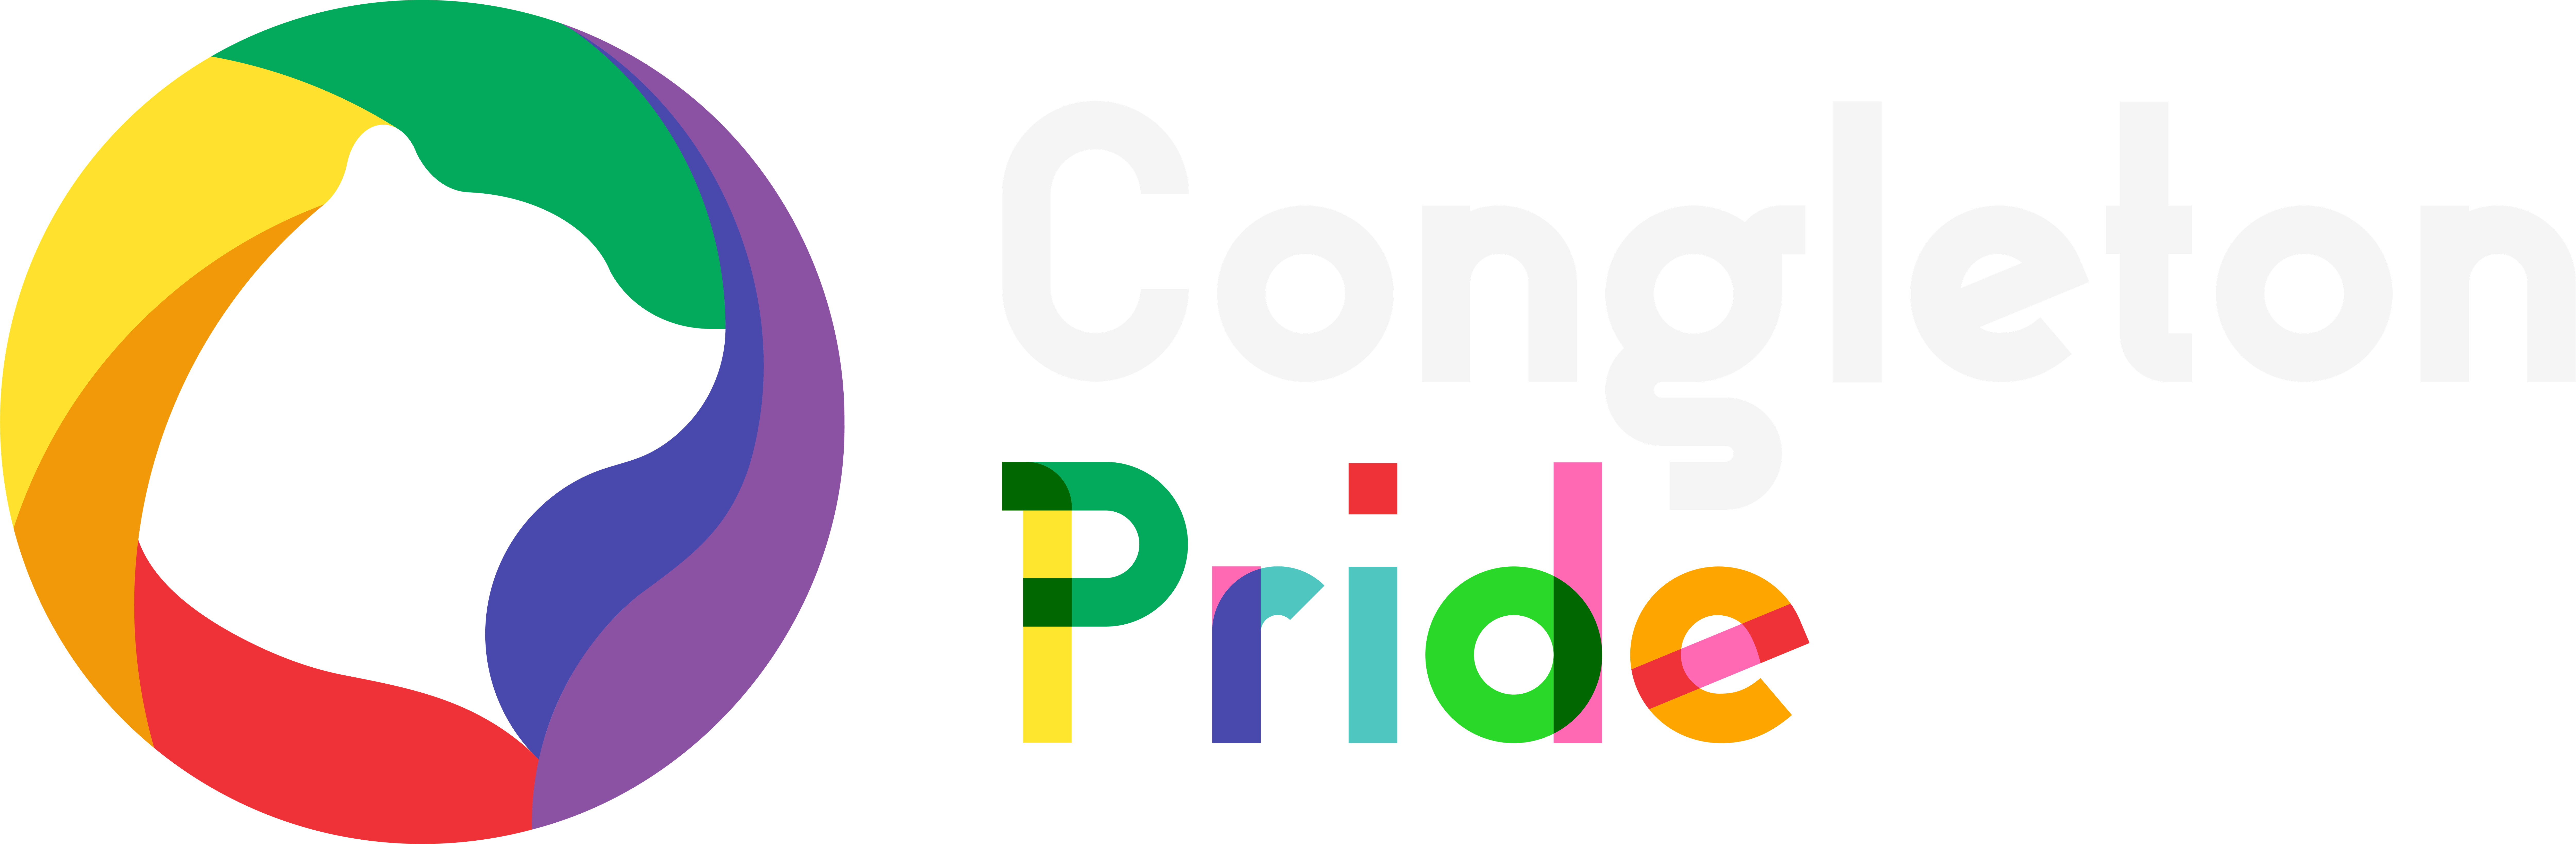 Congleton Pride, 2-line logo for dark background